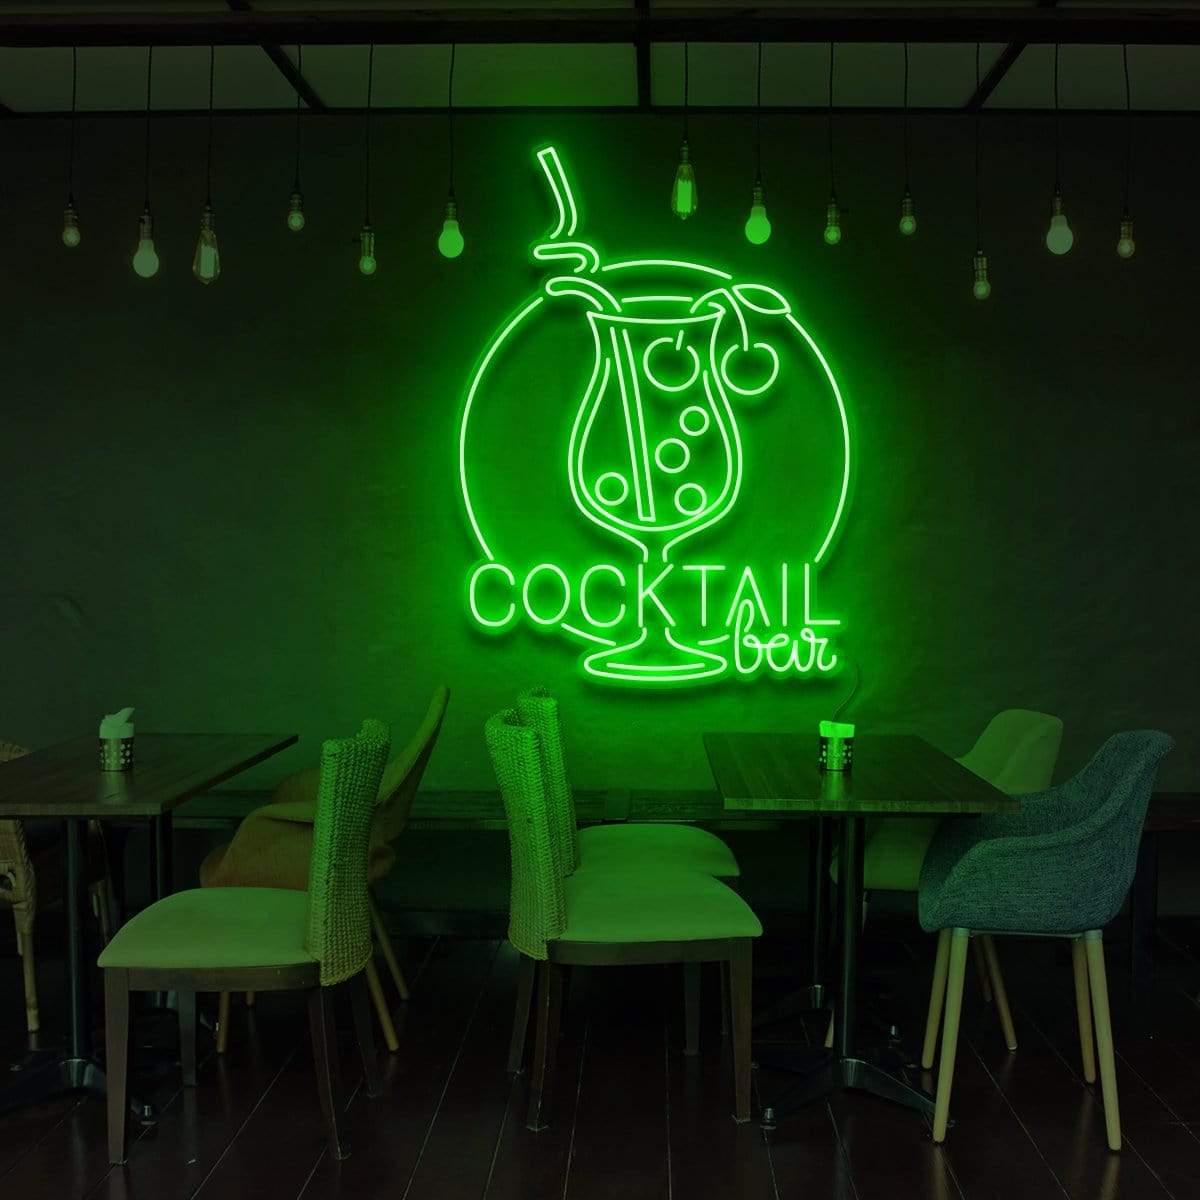 "Cocktail Bar" Neon Sign for Bars & Restaurants